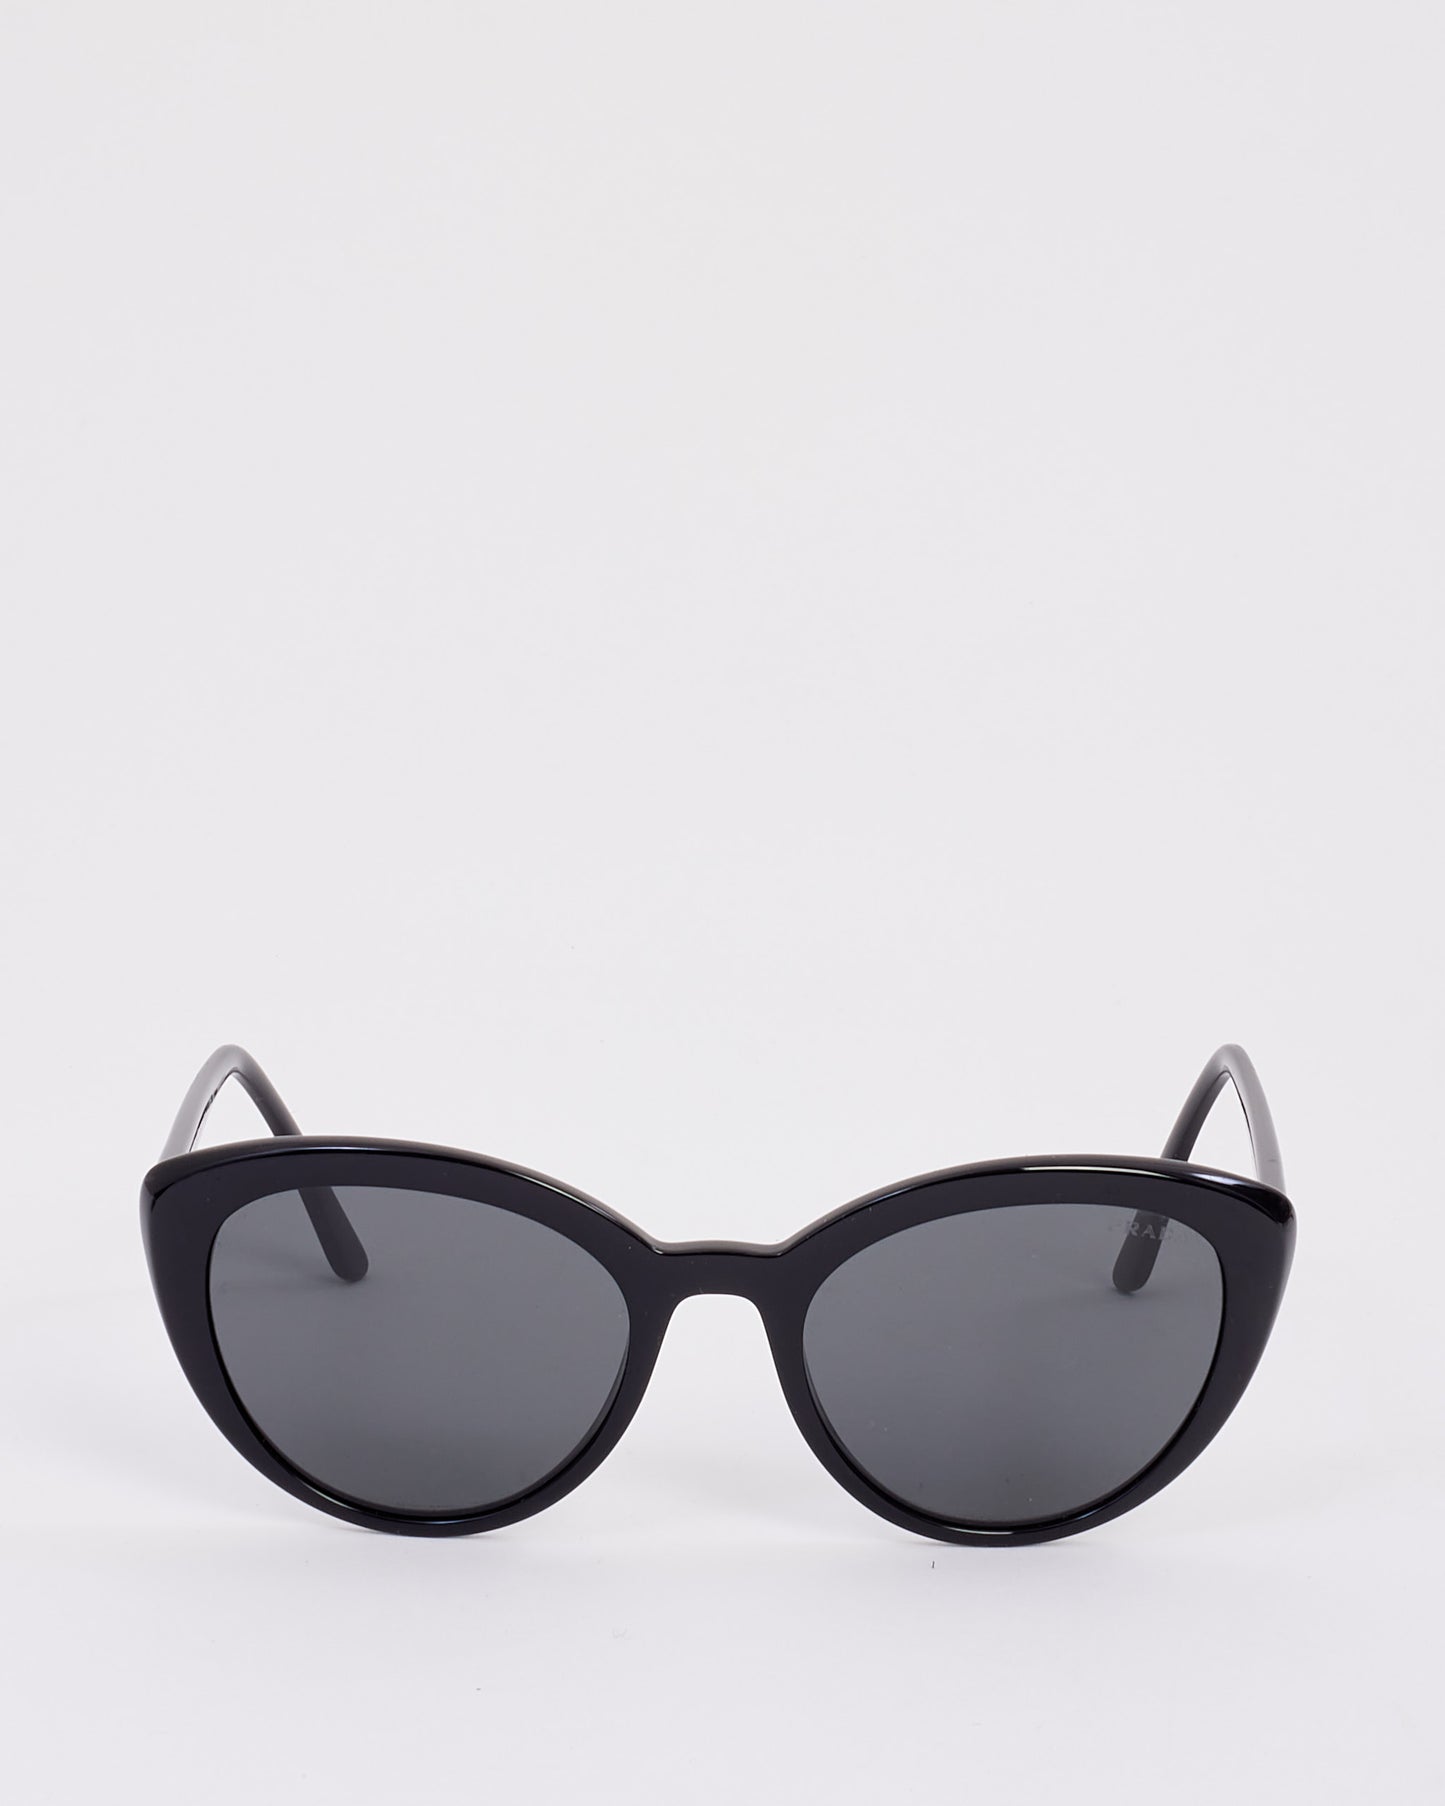 Prada Black Acetate Cat Eye SPR 02V Sunglasses